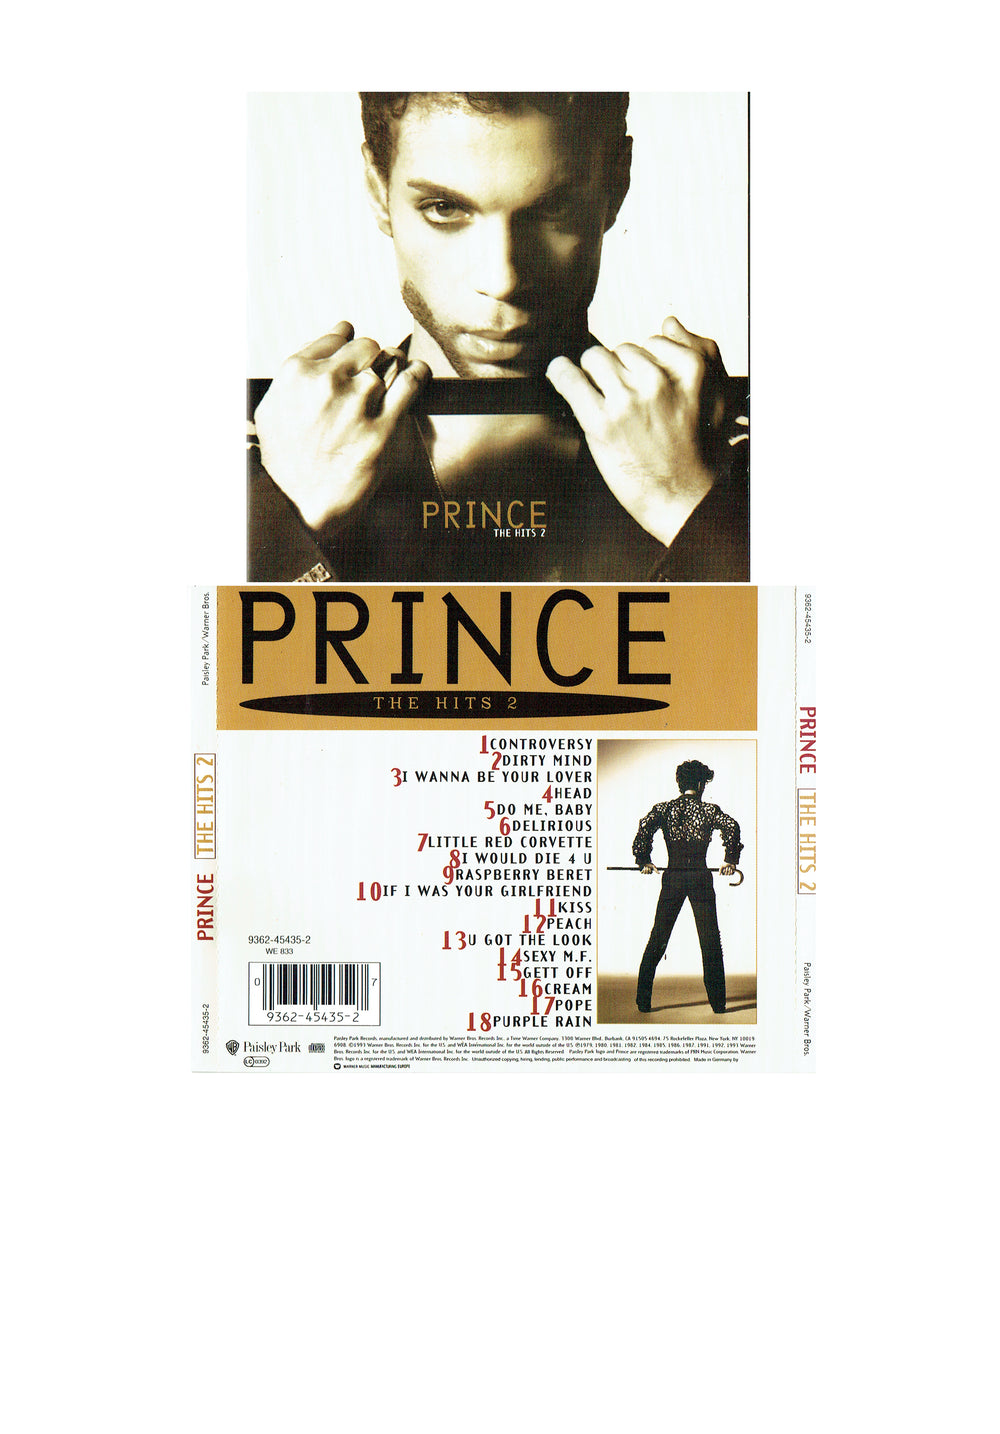 Prince – The Hits 2 1993 Original CD Album